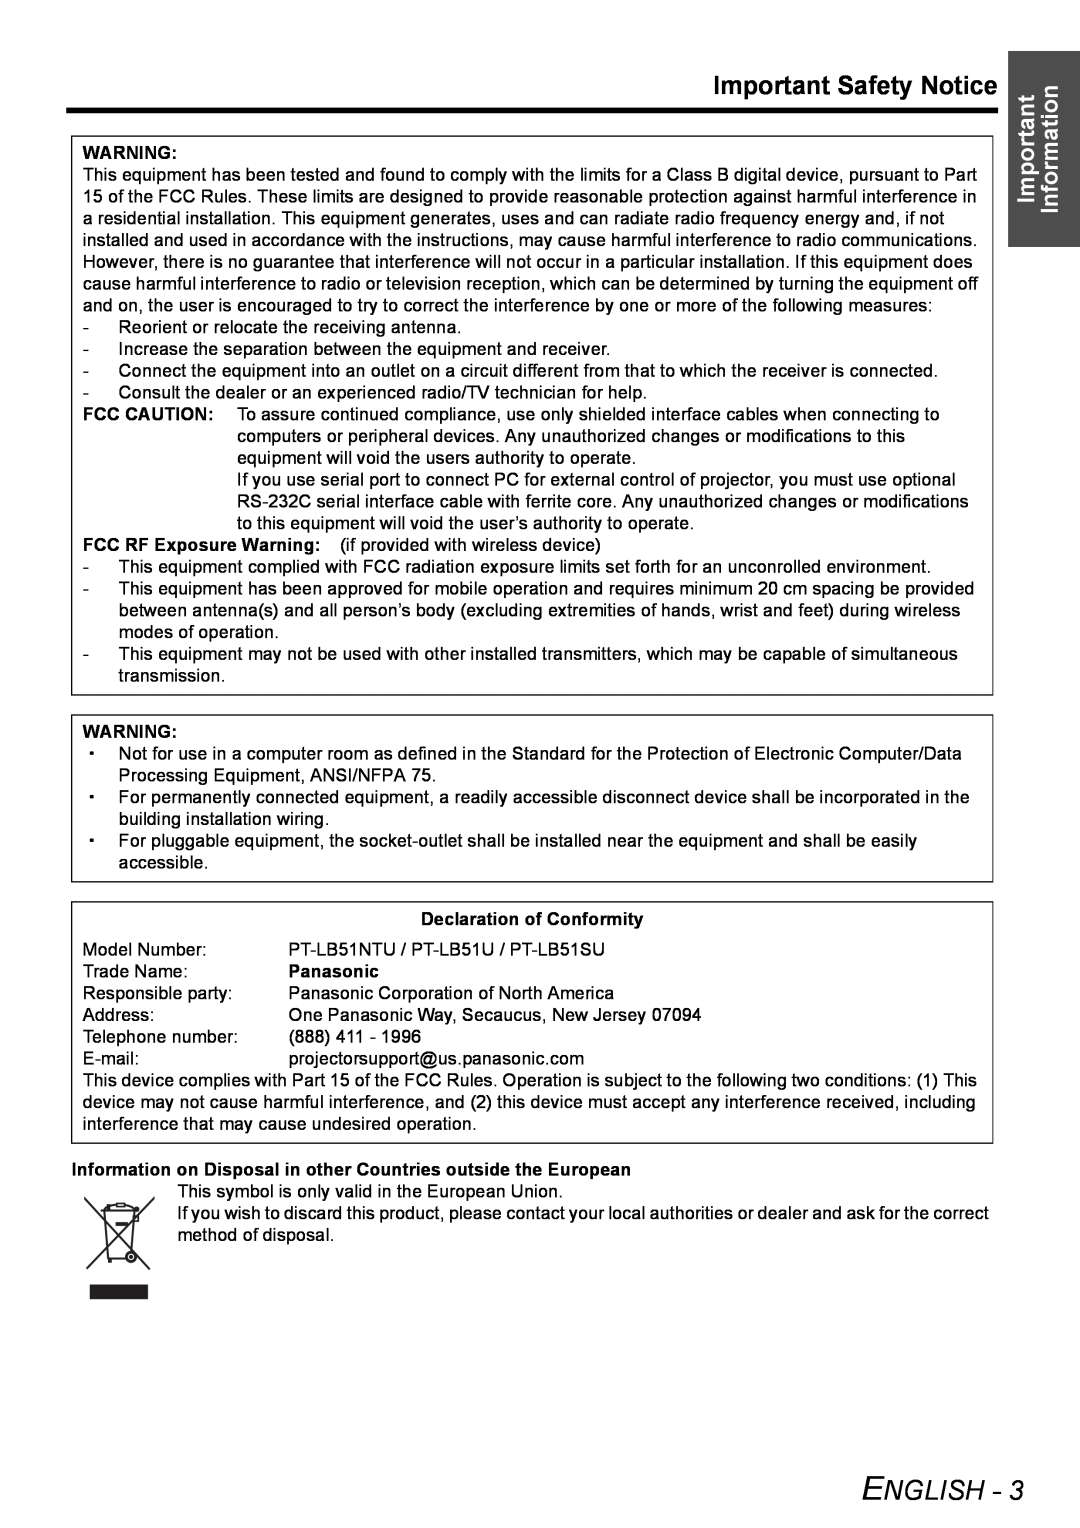 Panasonic PT-LB51NTU Important Safety Notice, English, Important Information, Declaration of Conformity, Panasonic 